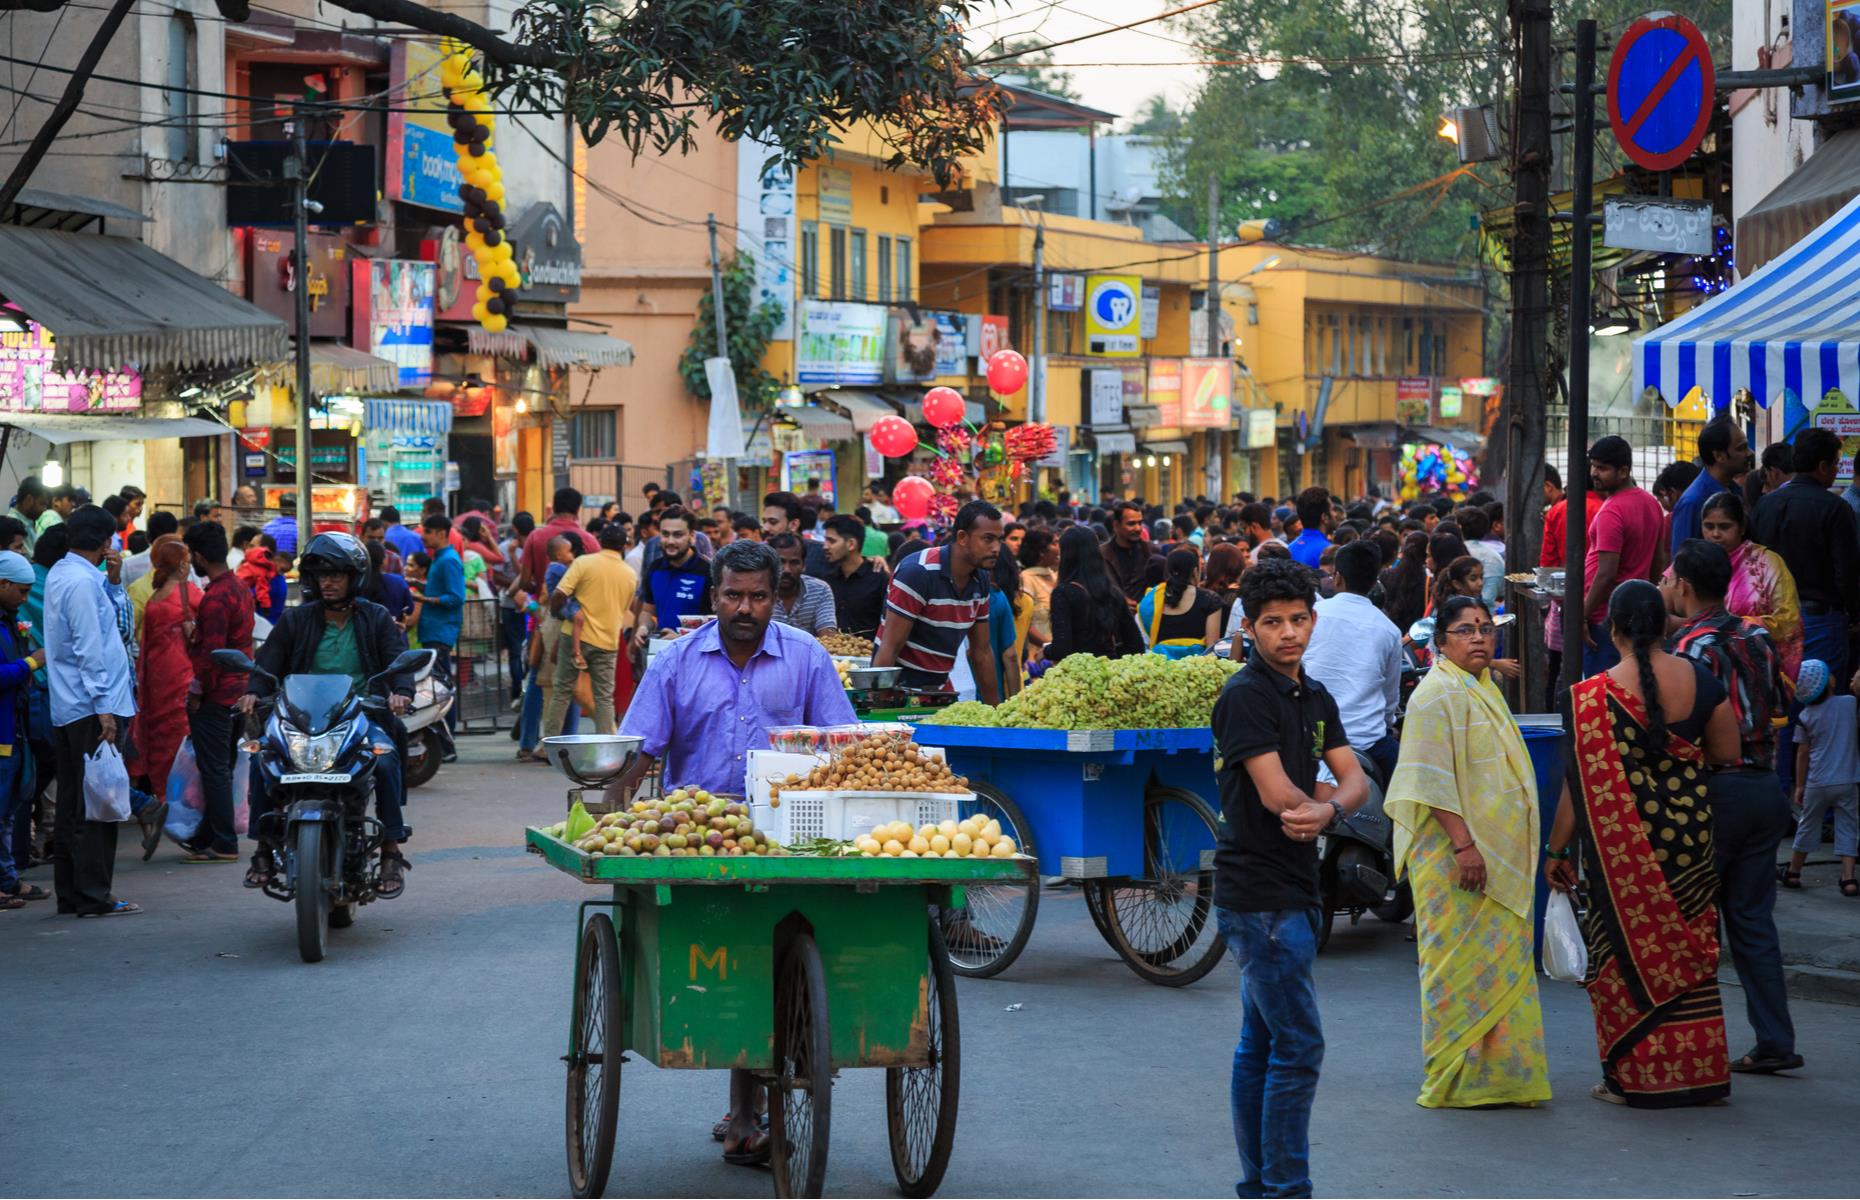 5th cheapest: Bengaluru, India